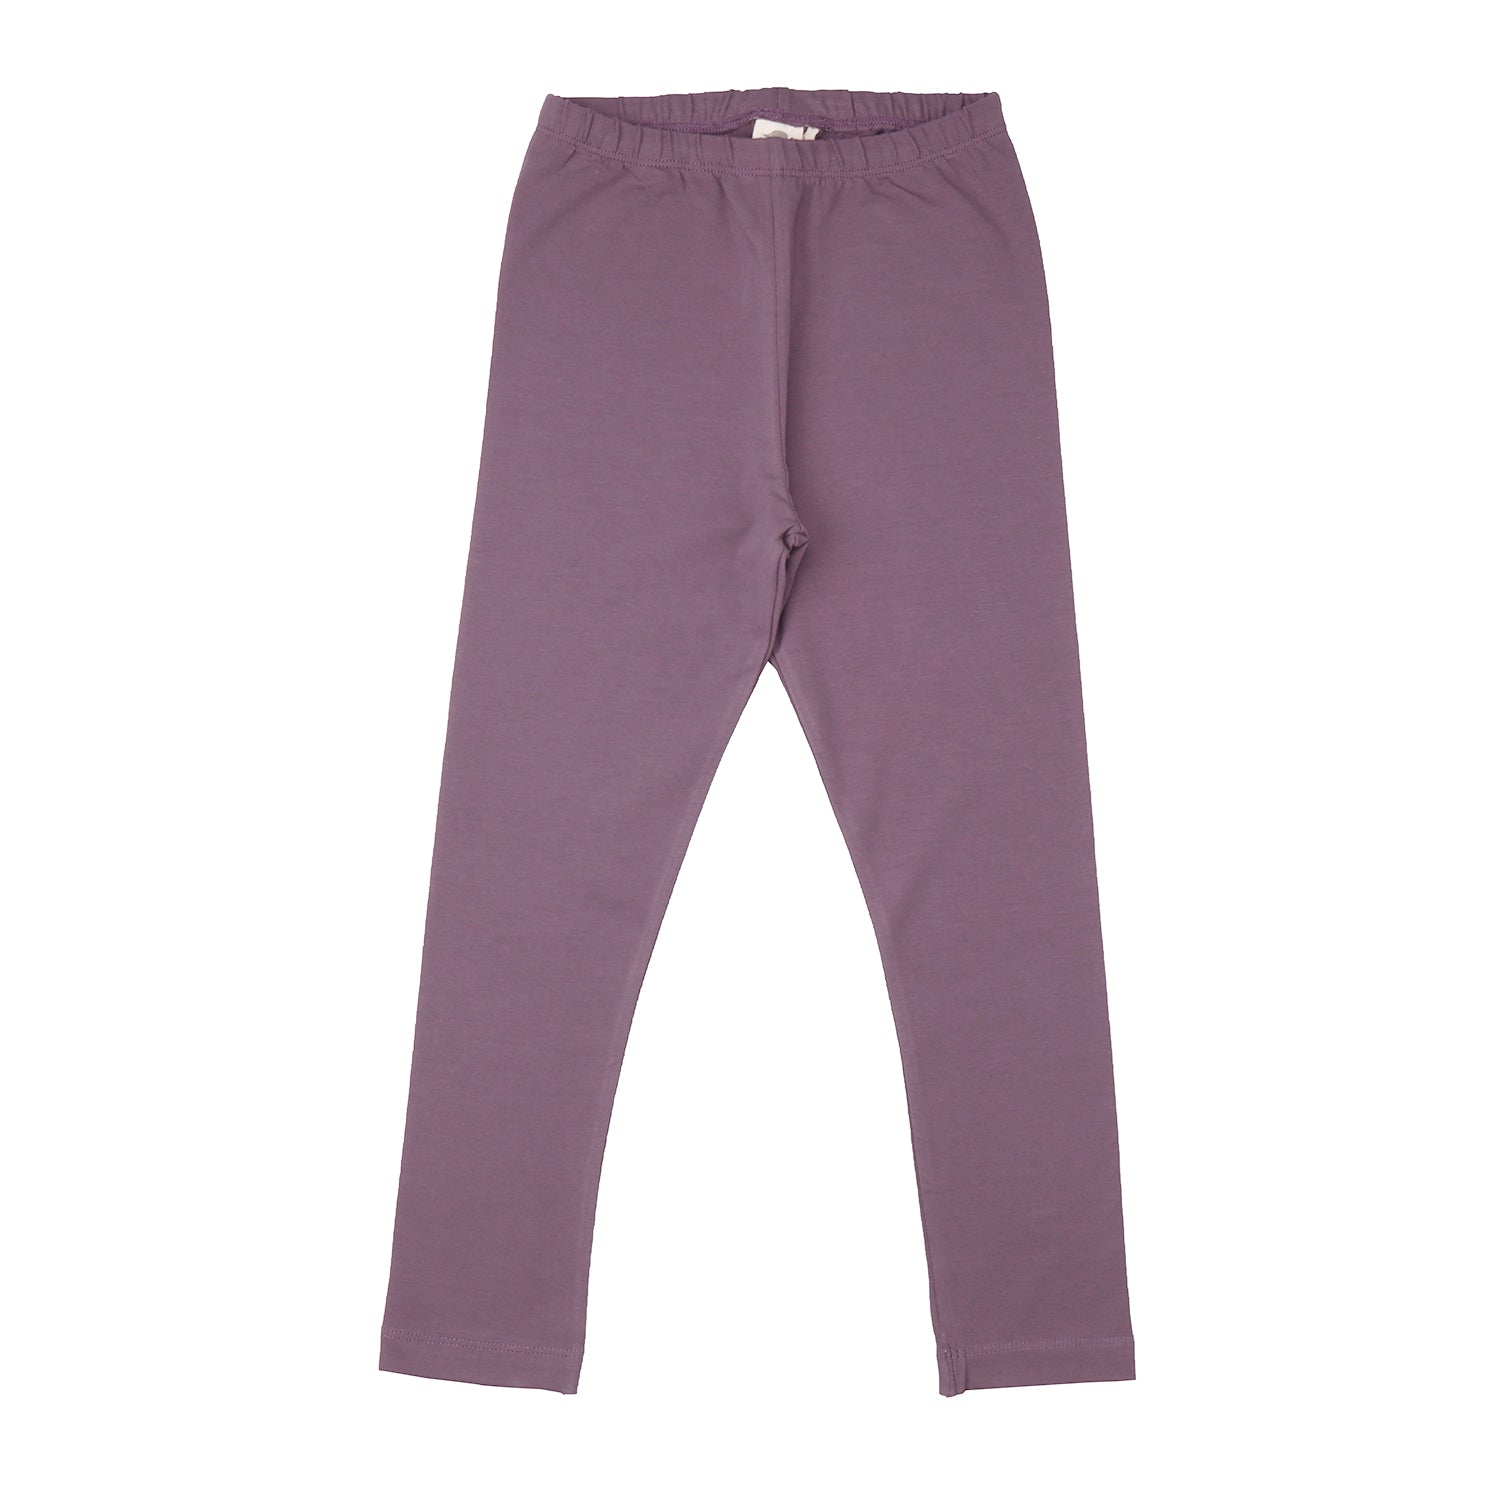 Leggings Full Length -Solid Purple